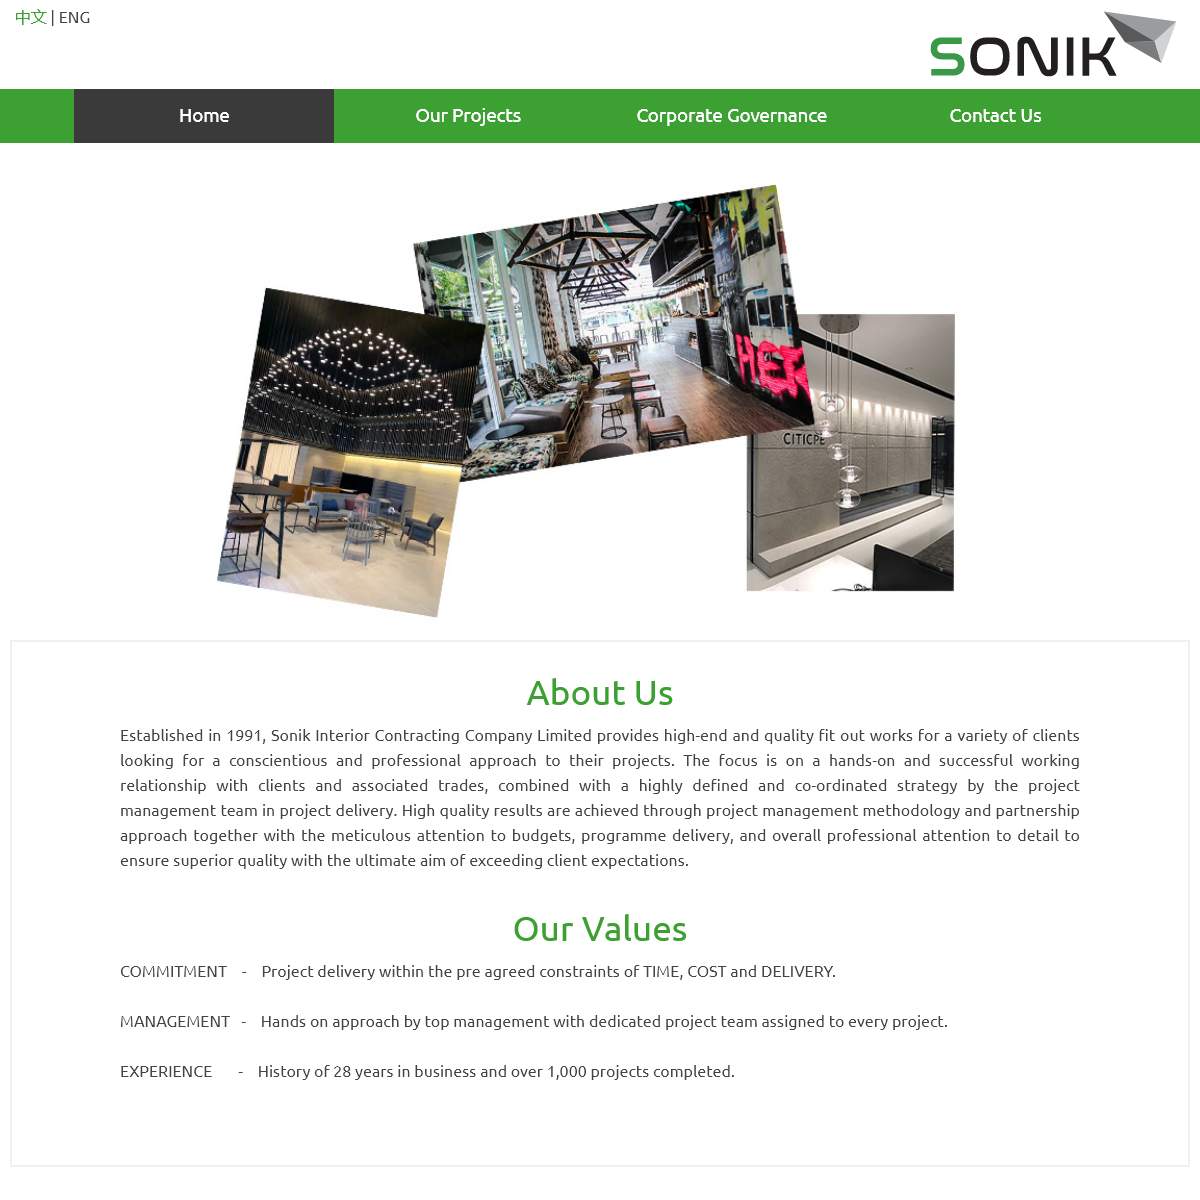 A complete backup of sonikhk.com